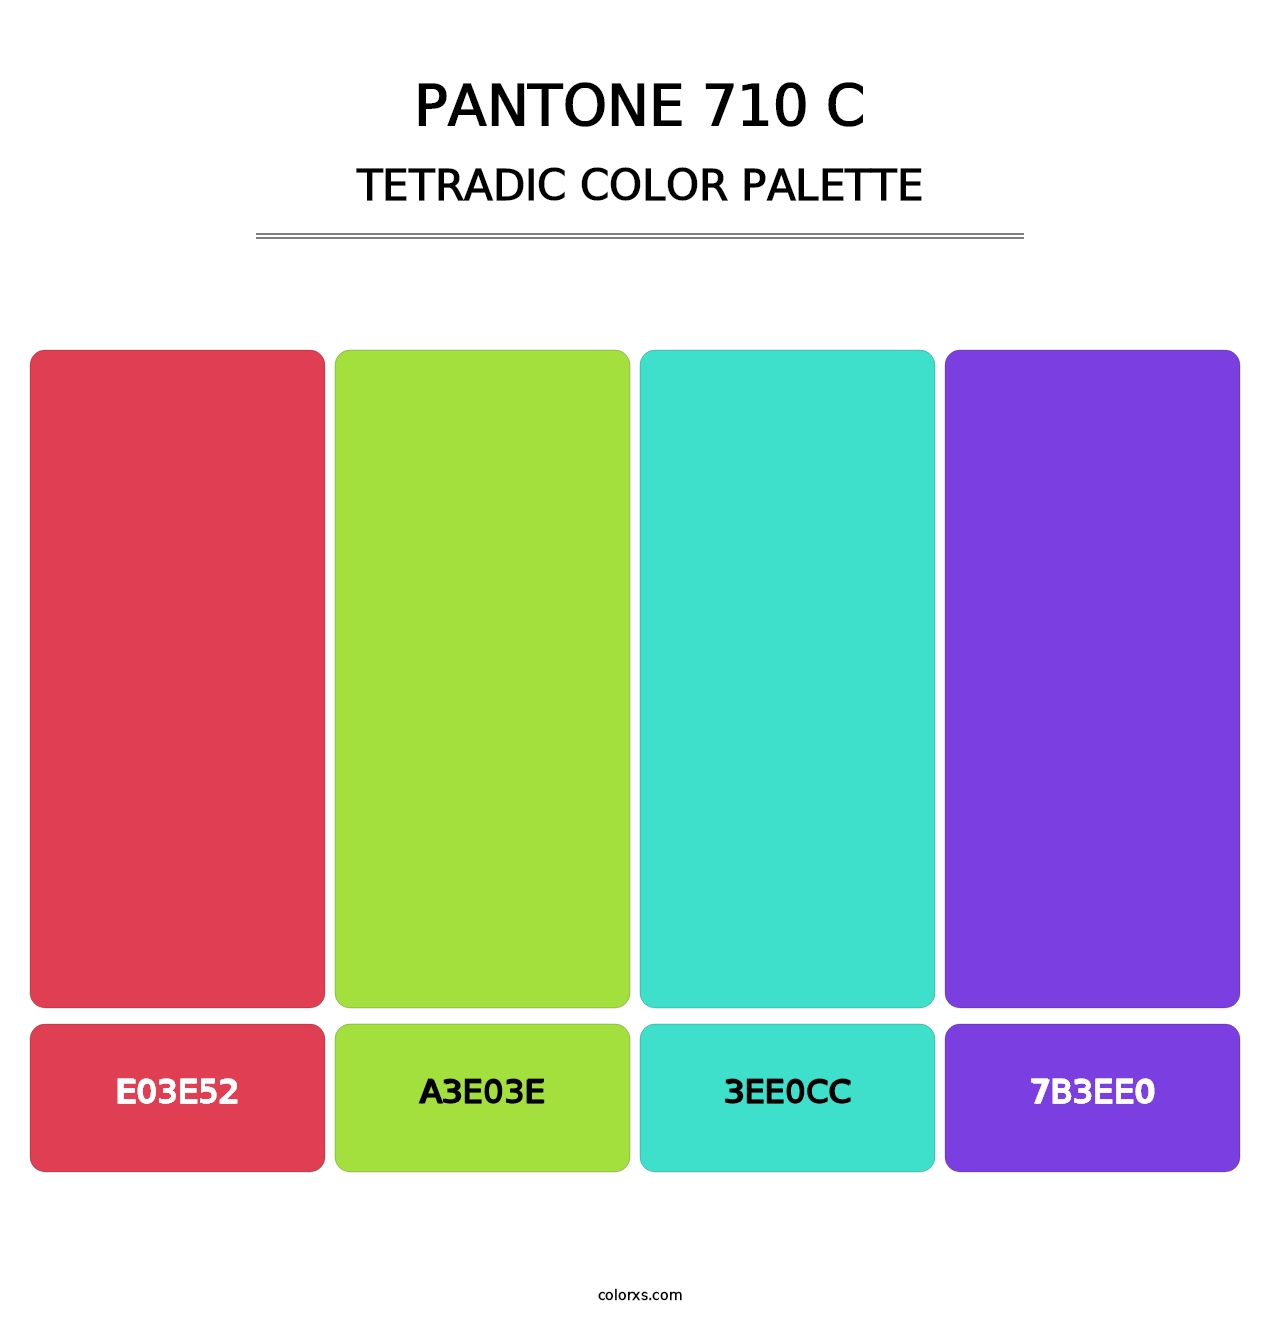 PANTONE 710 C - Tetradic Color Palette